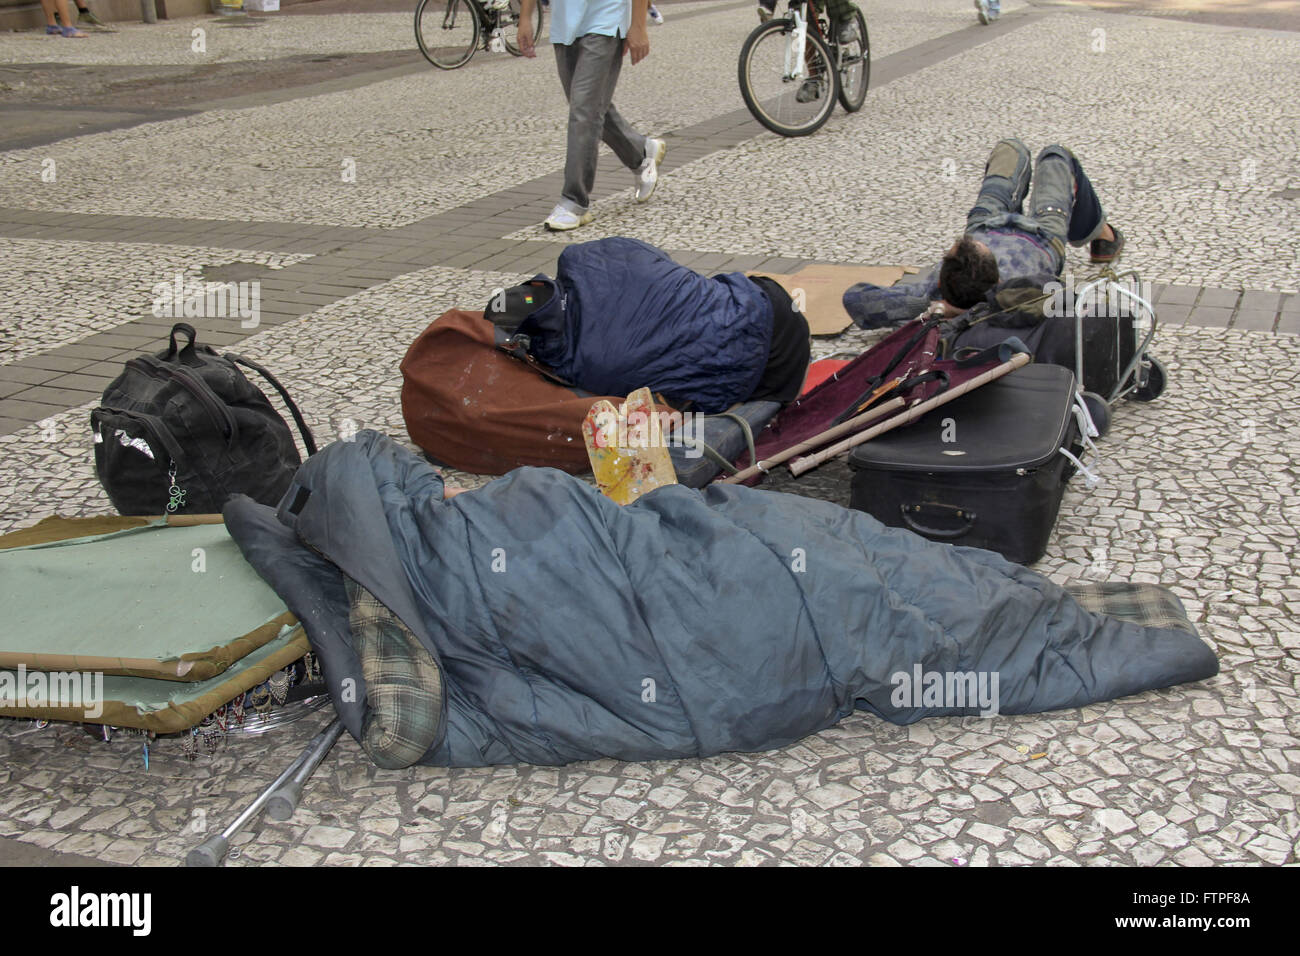 Homeless People Sleeping On The Floor City Center Stock Photo